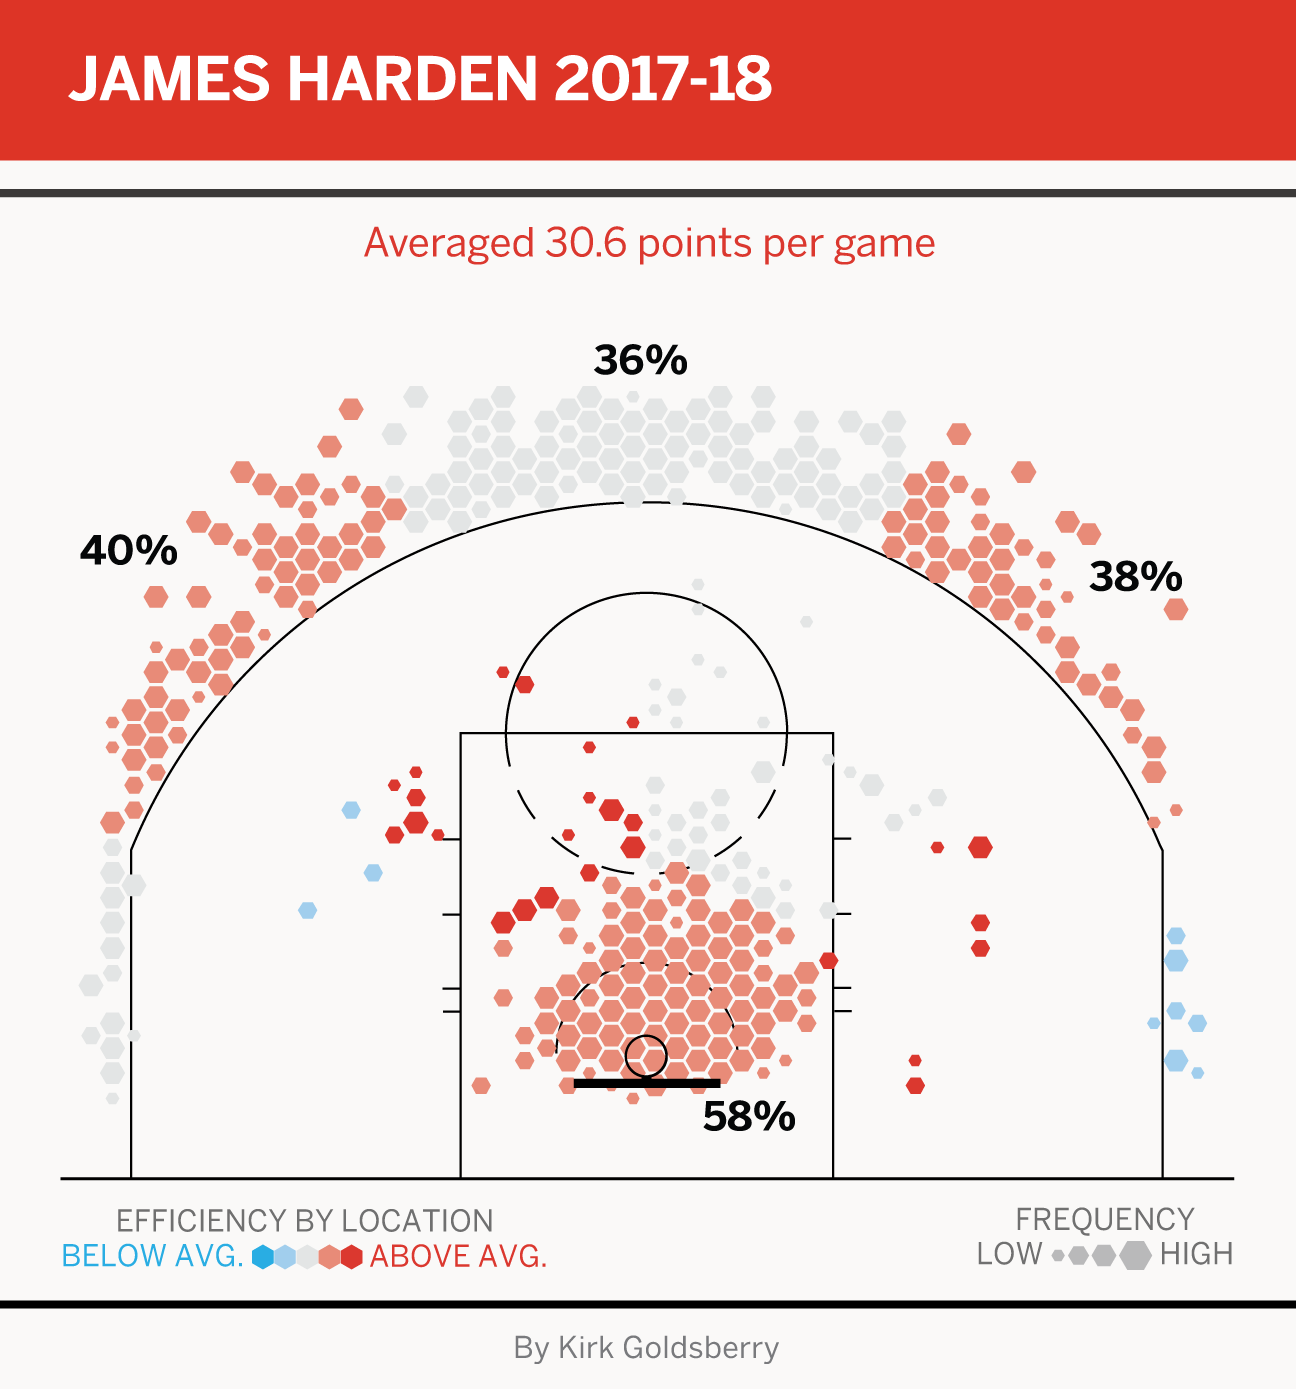 James Harden Shot Chart